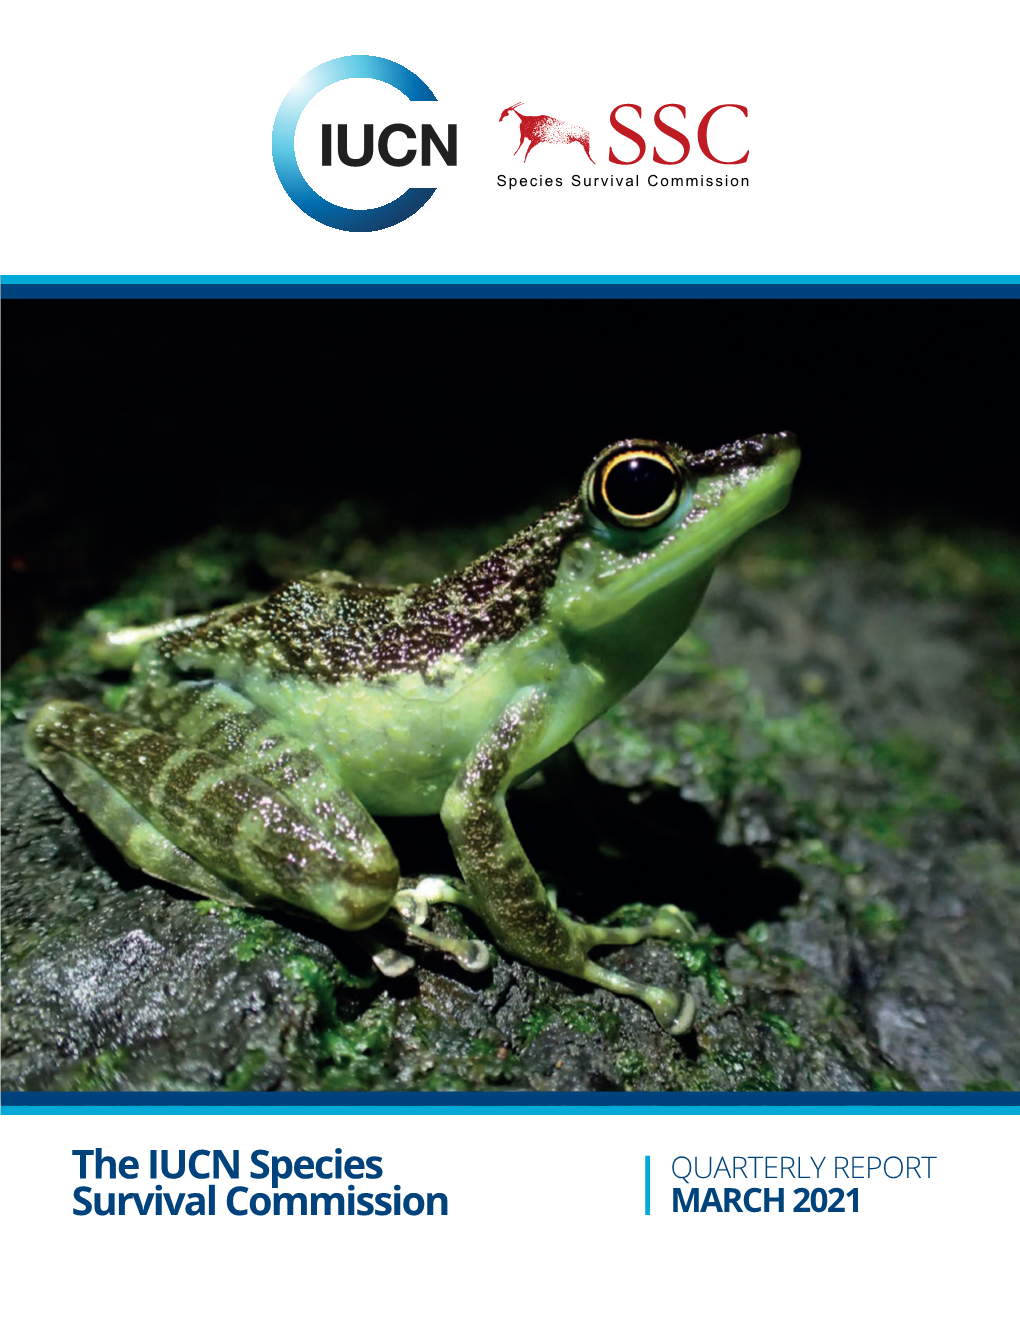 The IUCN Species Survival Commission